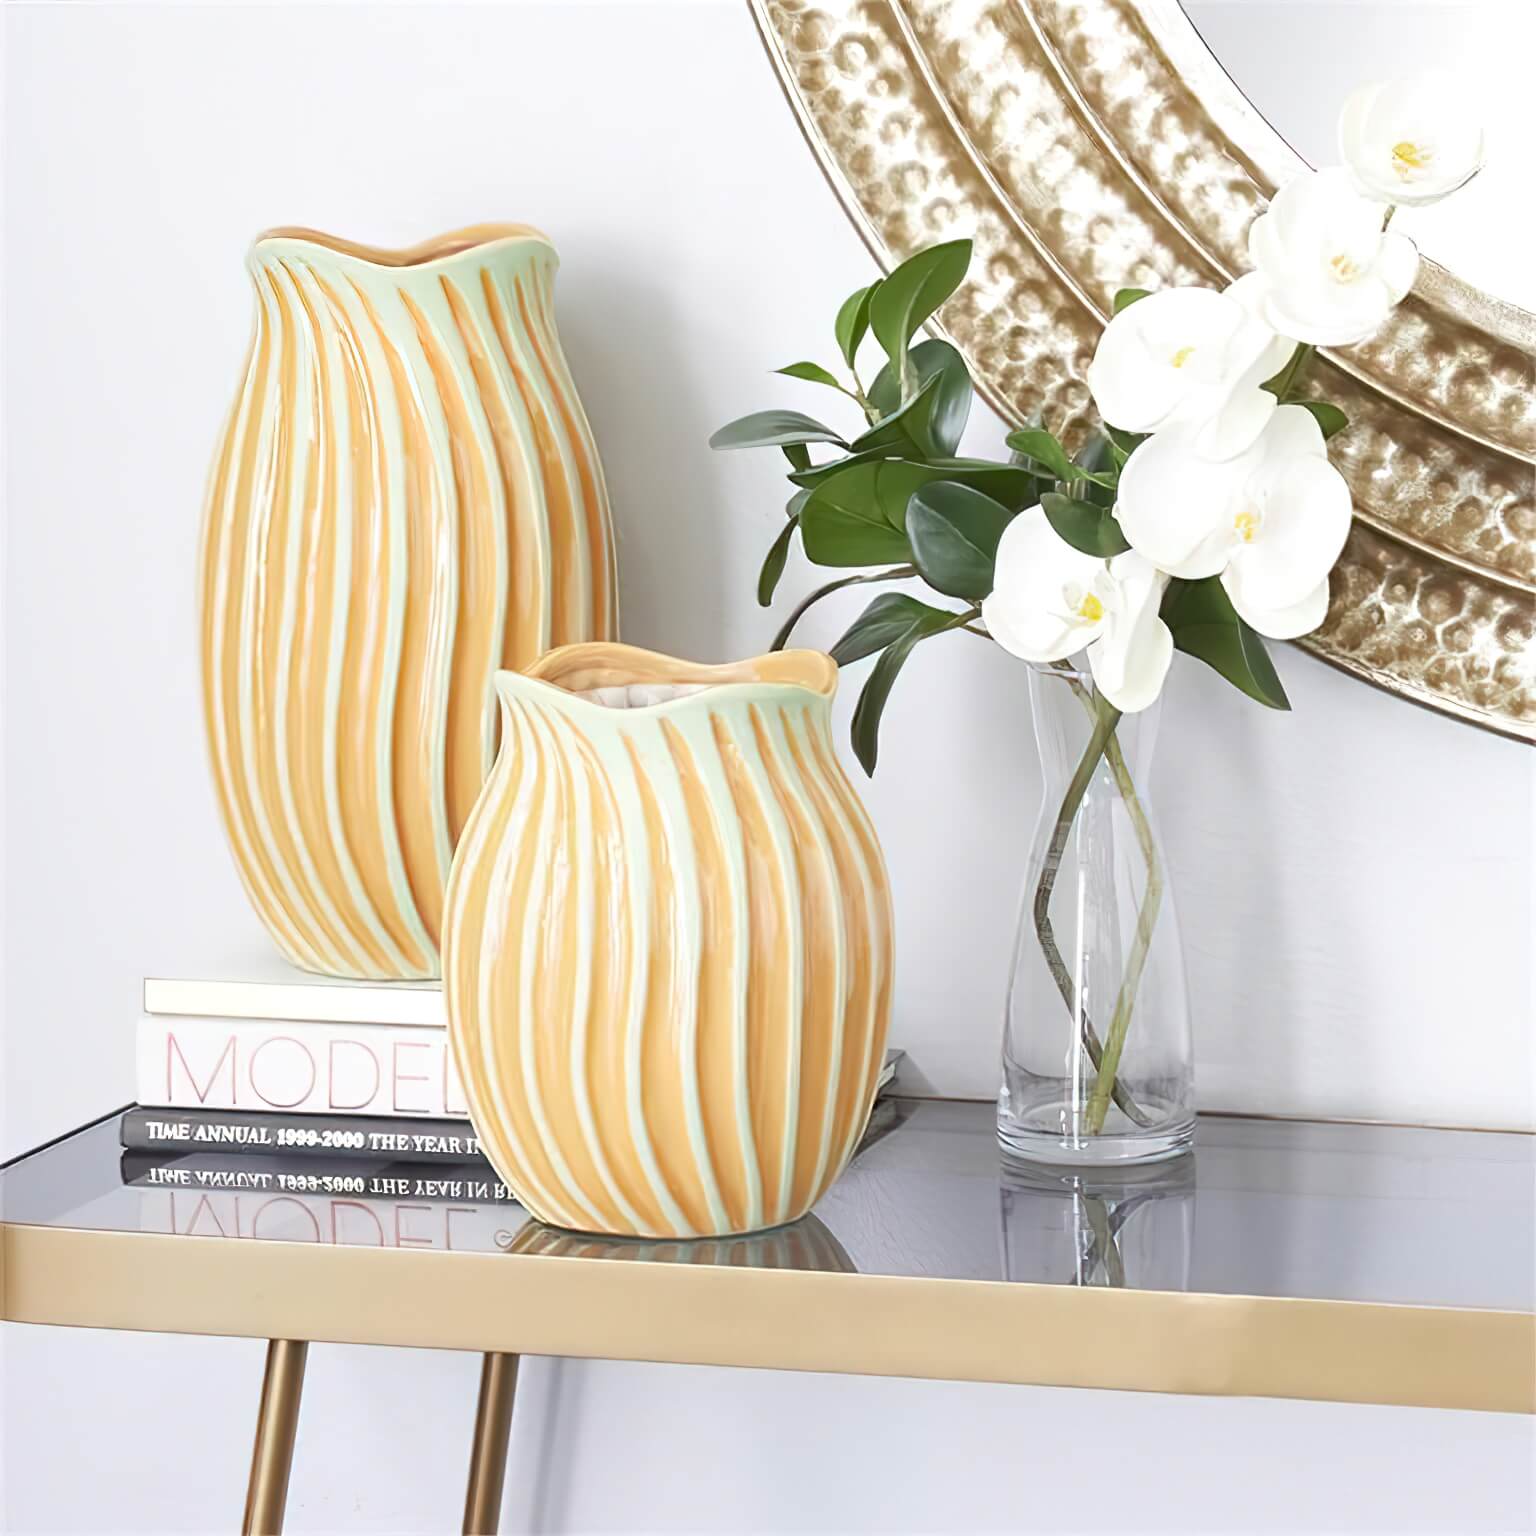 Orange Vases with Green Details Elevate Home Decor - Vases